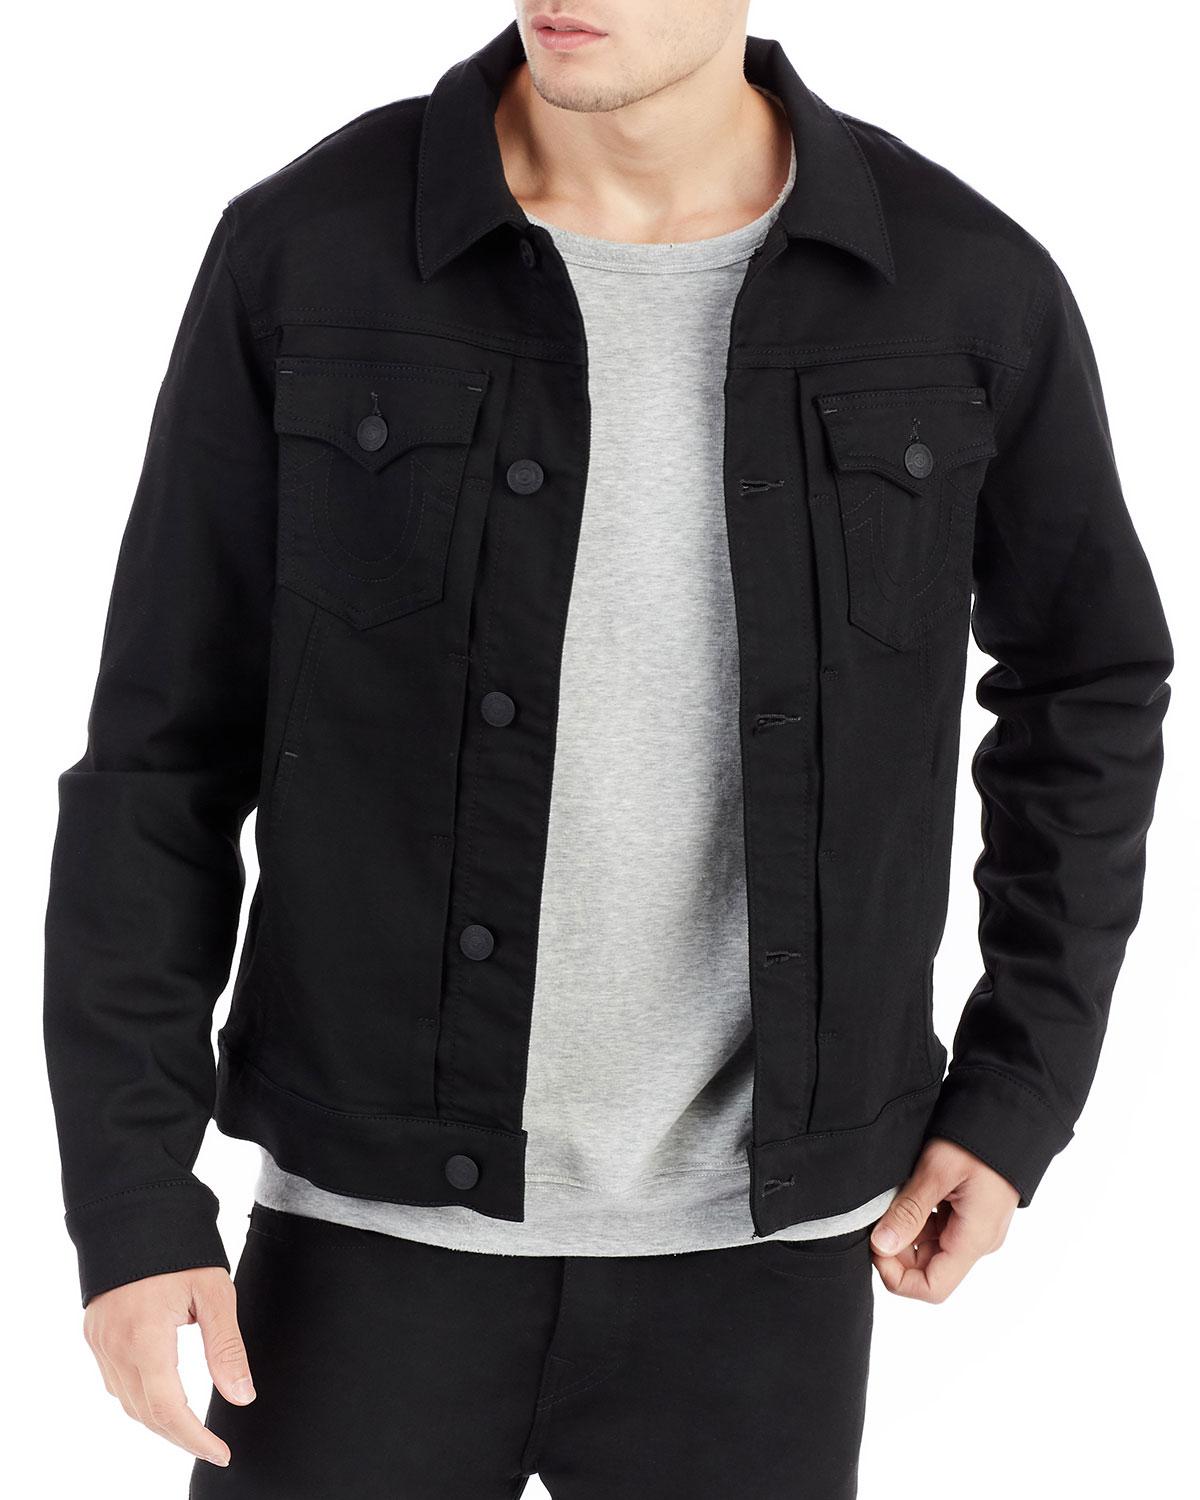 True Religion Ricky Denim Jacket in Black for Men - Lyst